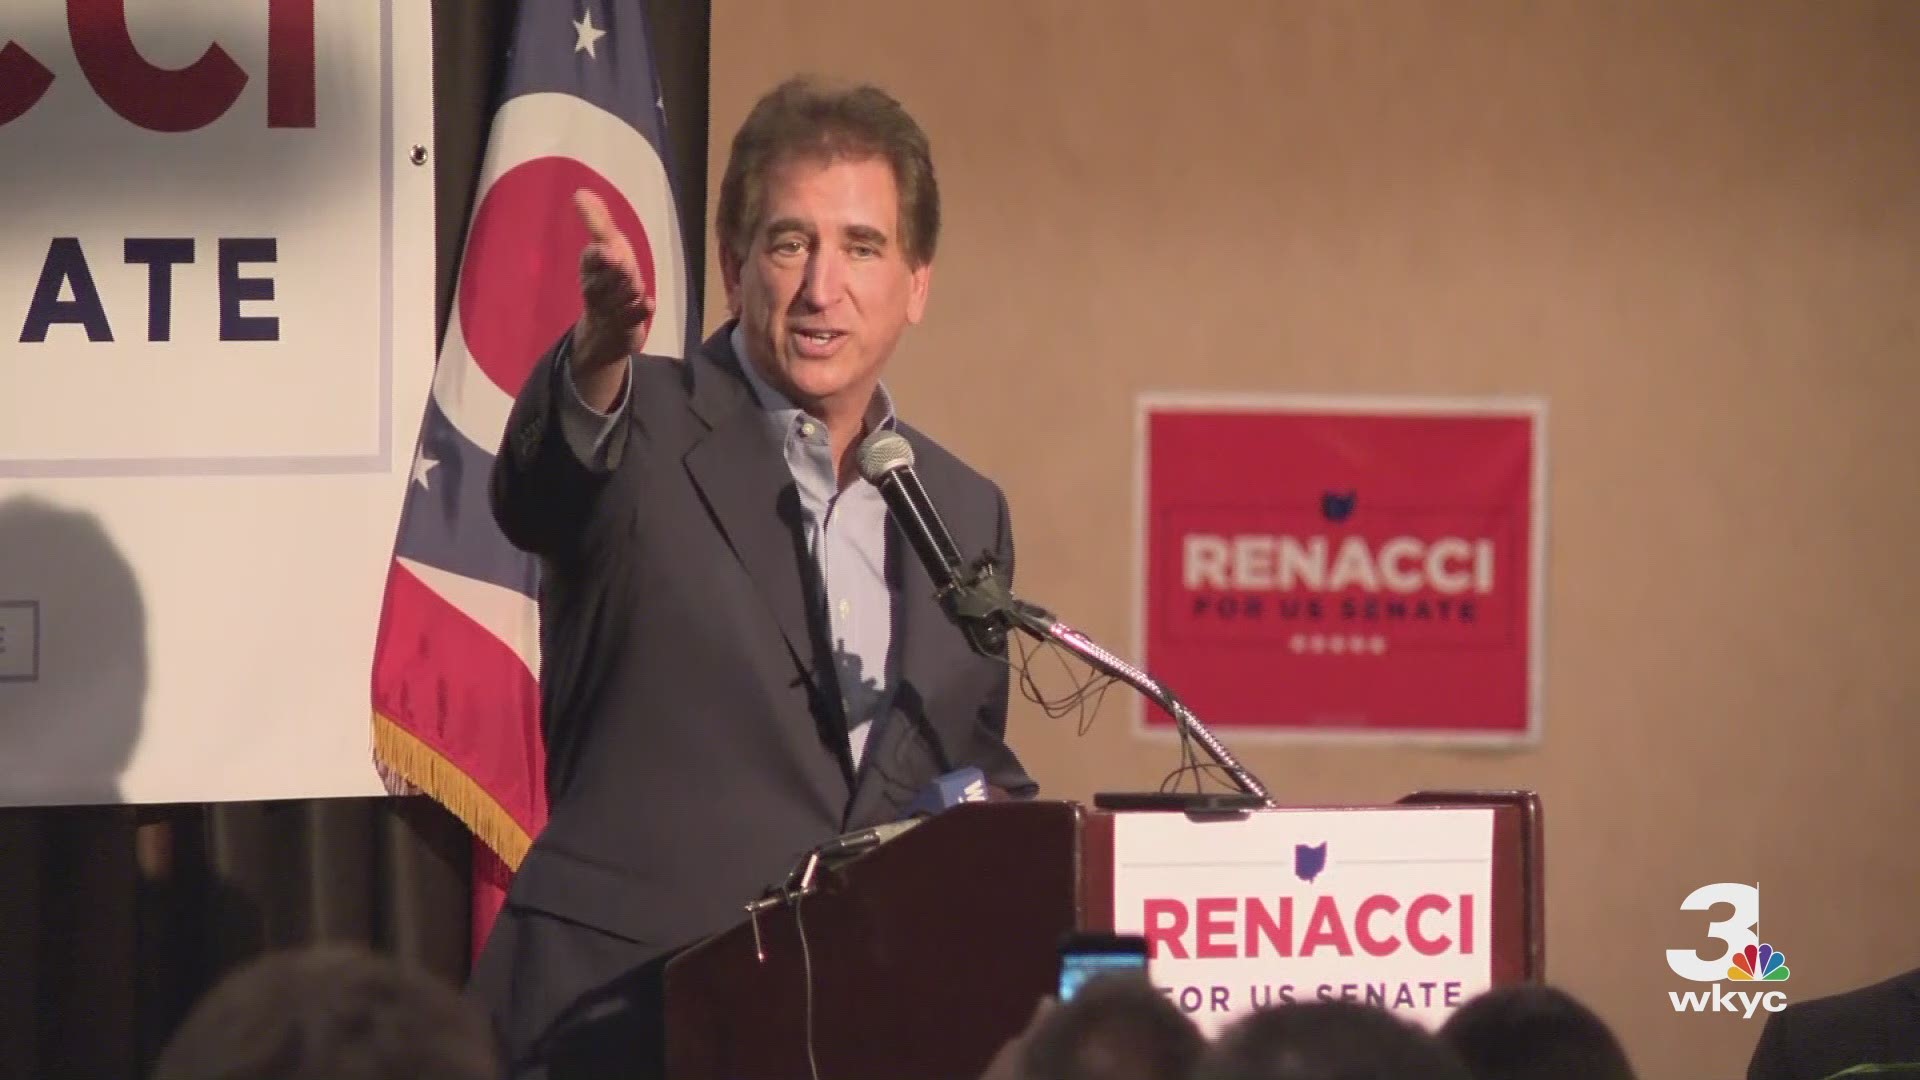 Jim Renacci gives acceptance speech after winning GOP bid for U.S. Senate